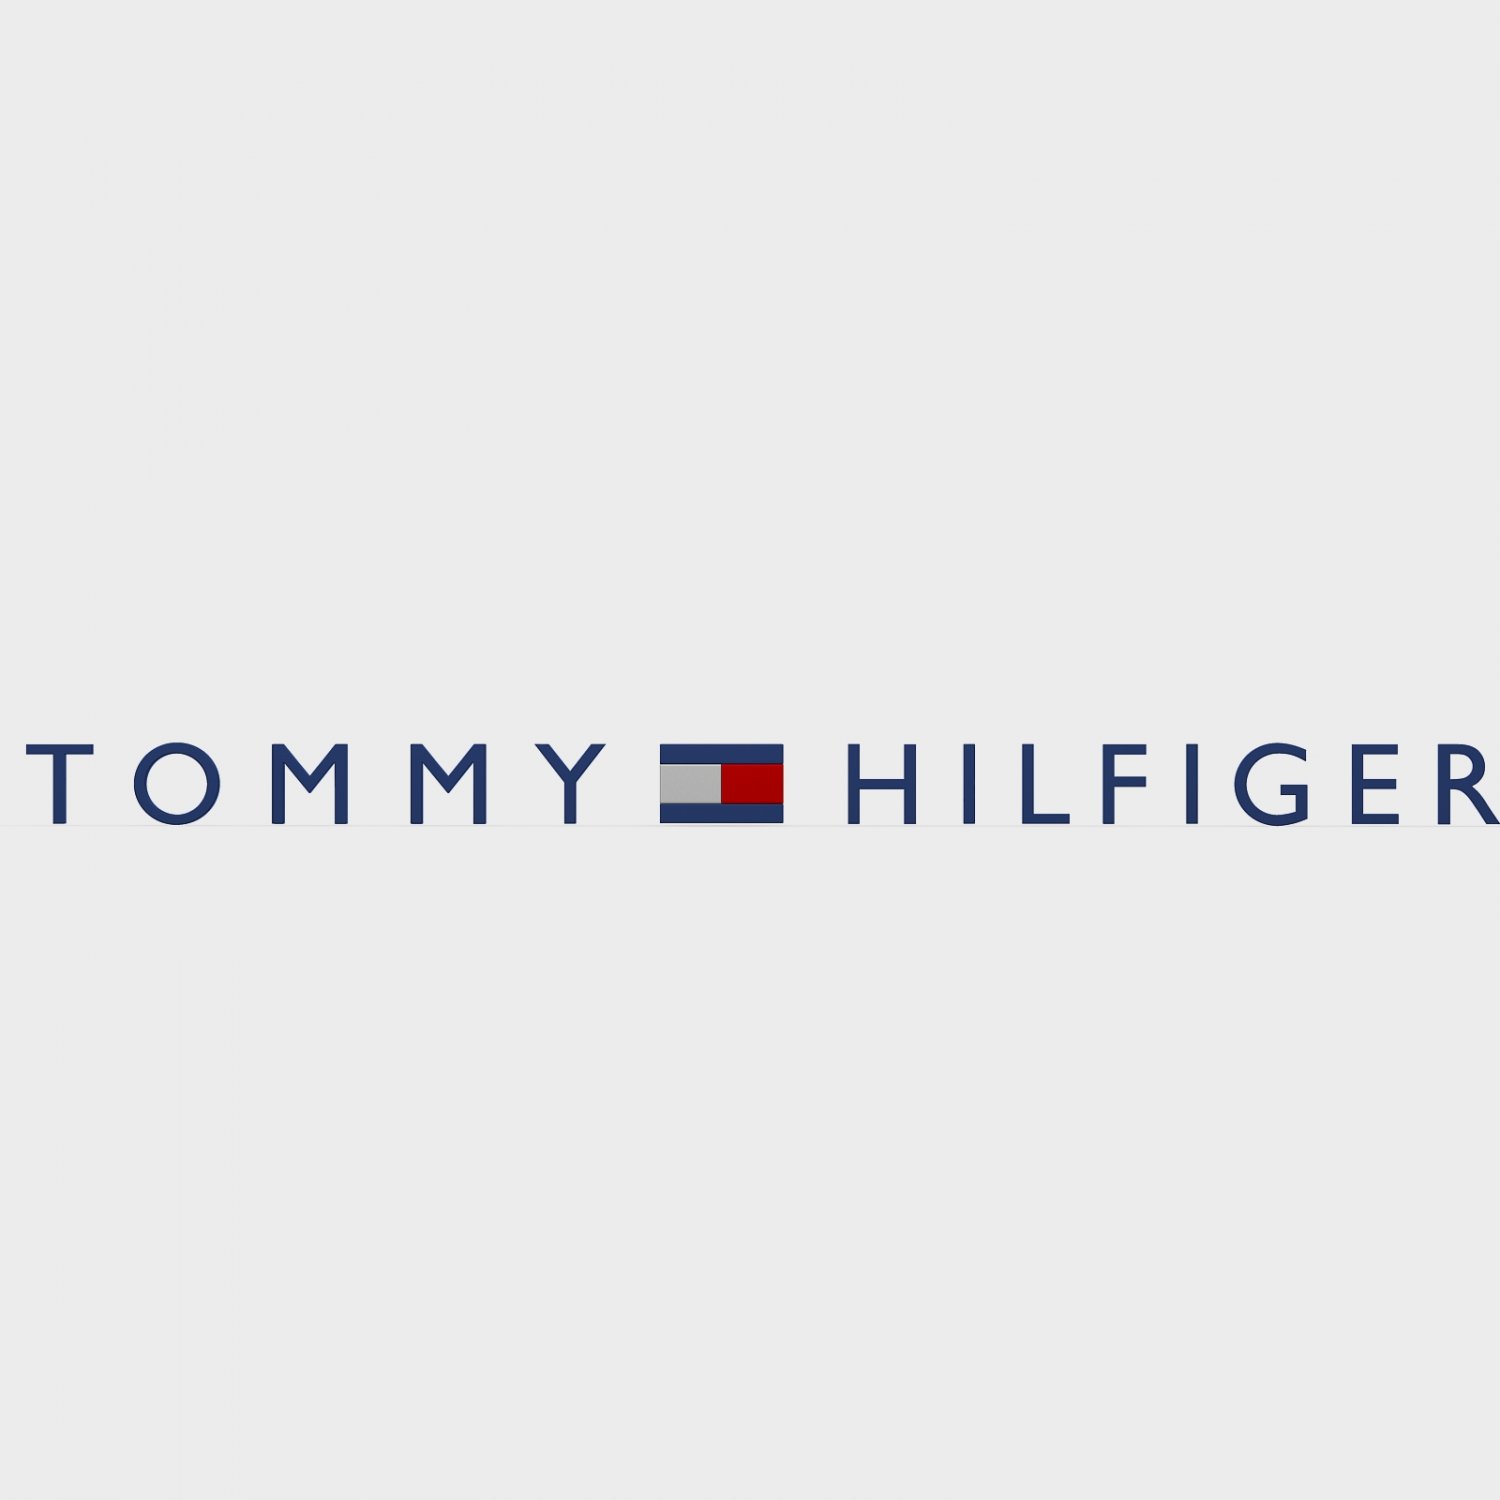 tommy hilfiger logo 2019